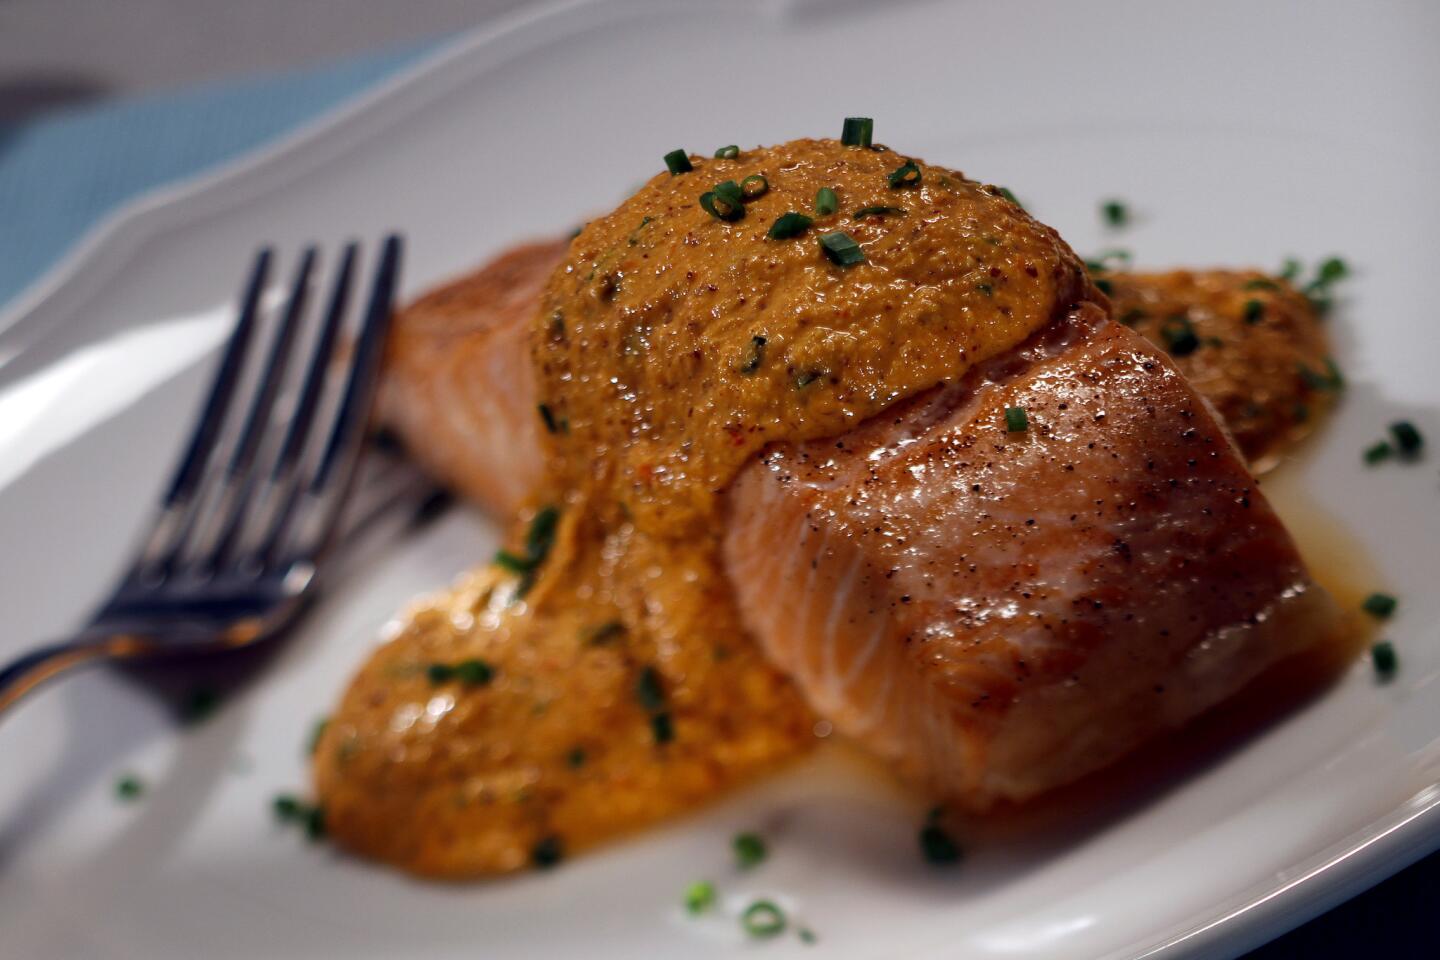 Easy dinner recipes: Three tempting fish taco ideas - Los Angeles Times